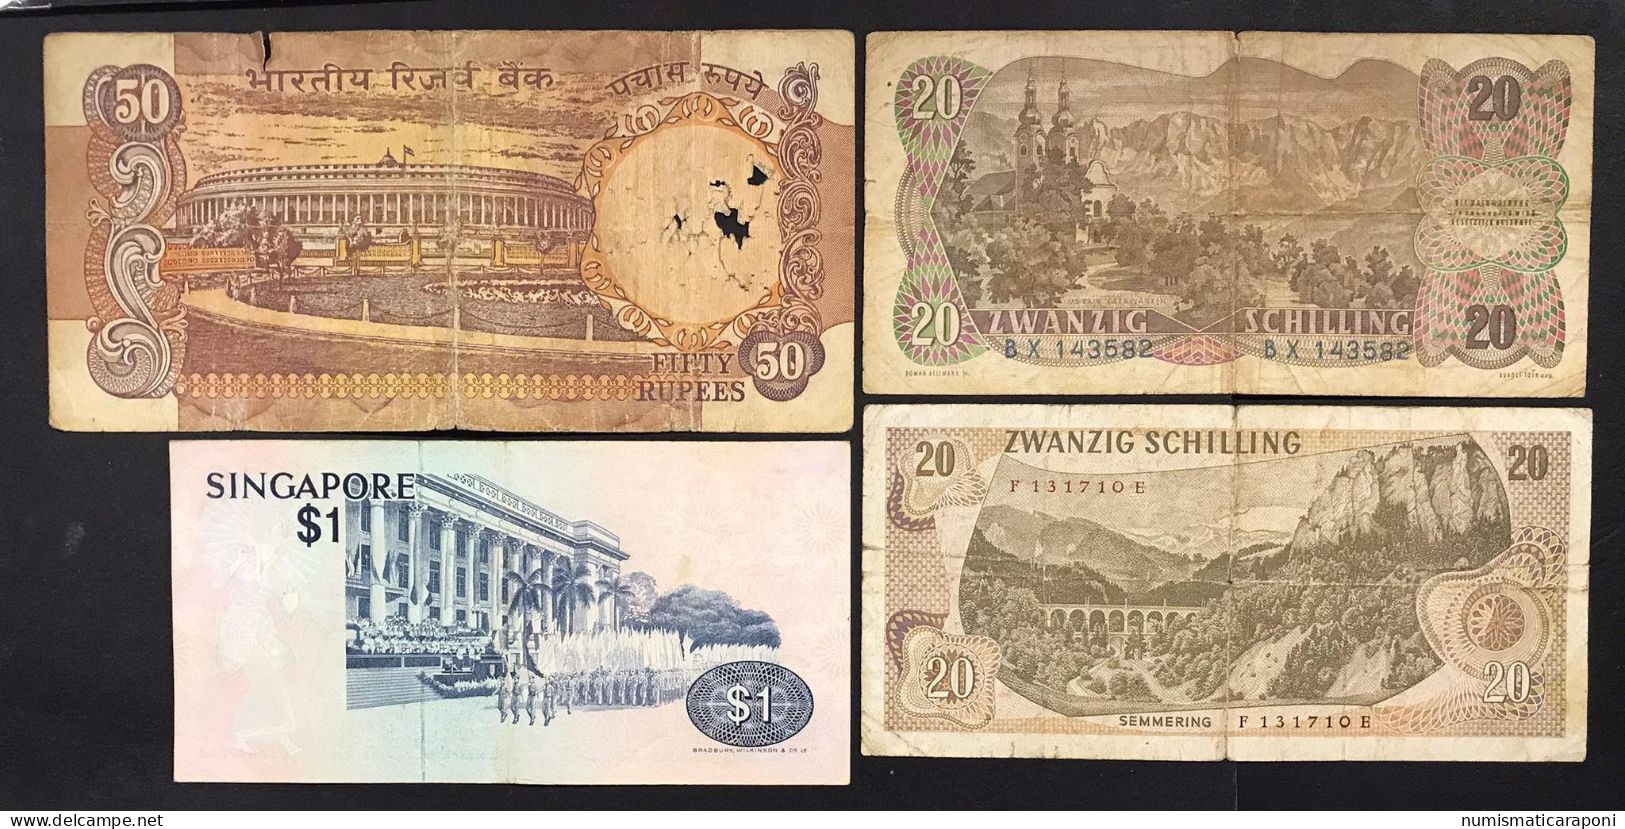 Albania Slovenia Venezuela Austria Singapore 9 Banconote   LOTTO 4705 - Albania